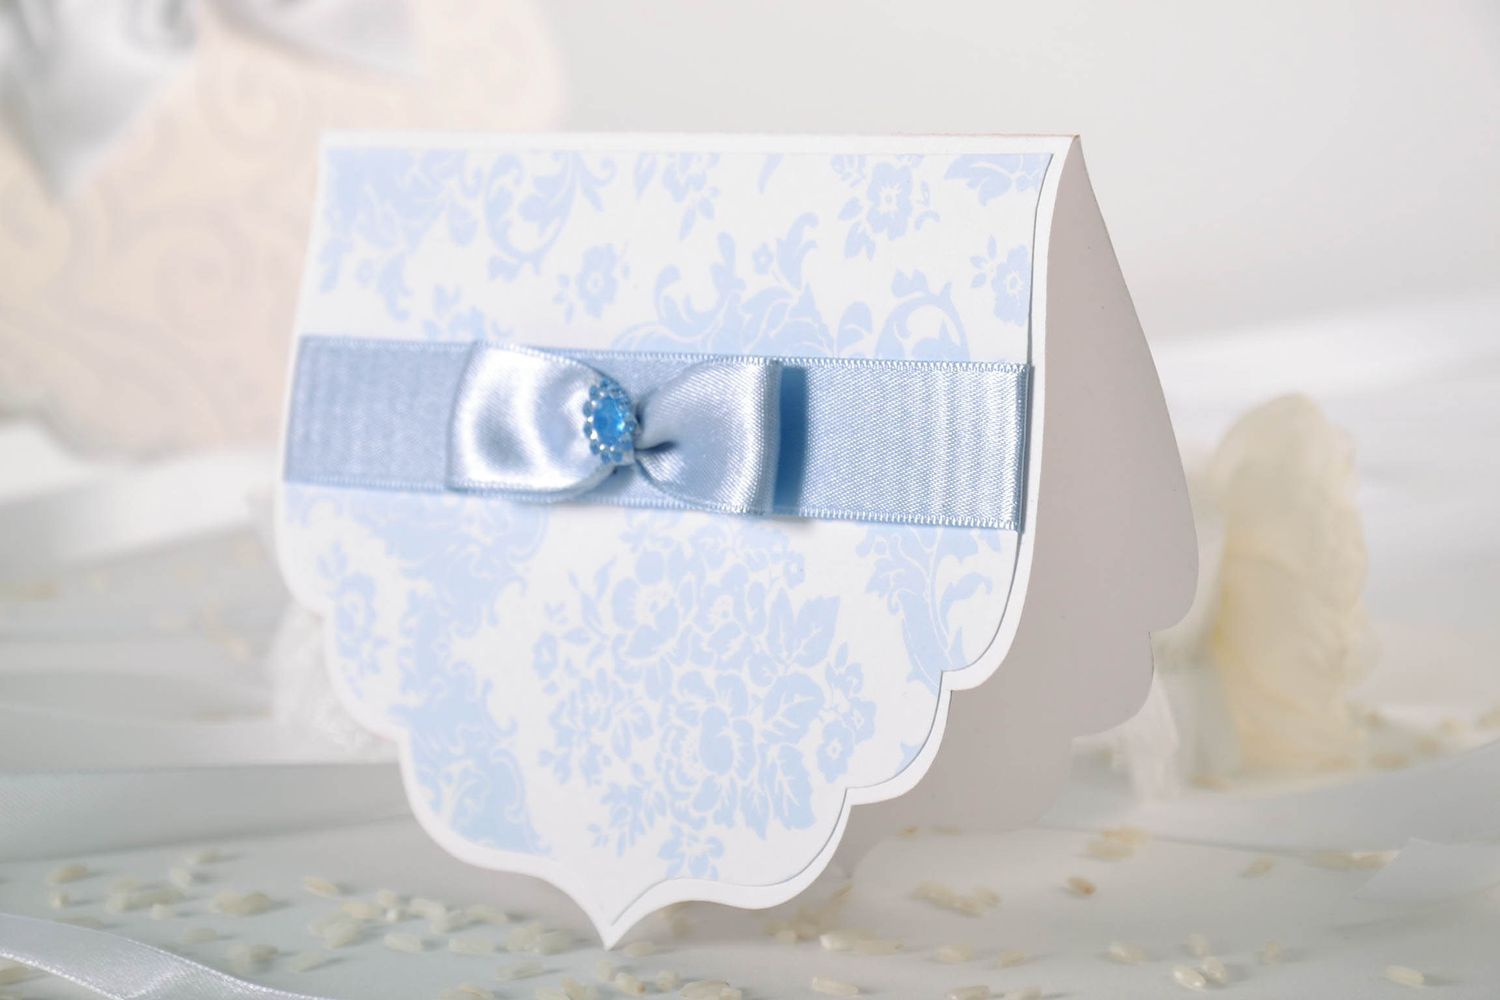 Invitation au mariage artisanale bleu et blanc photo 1